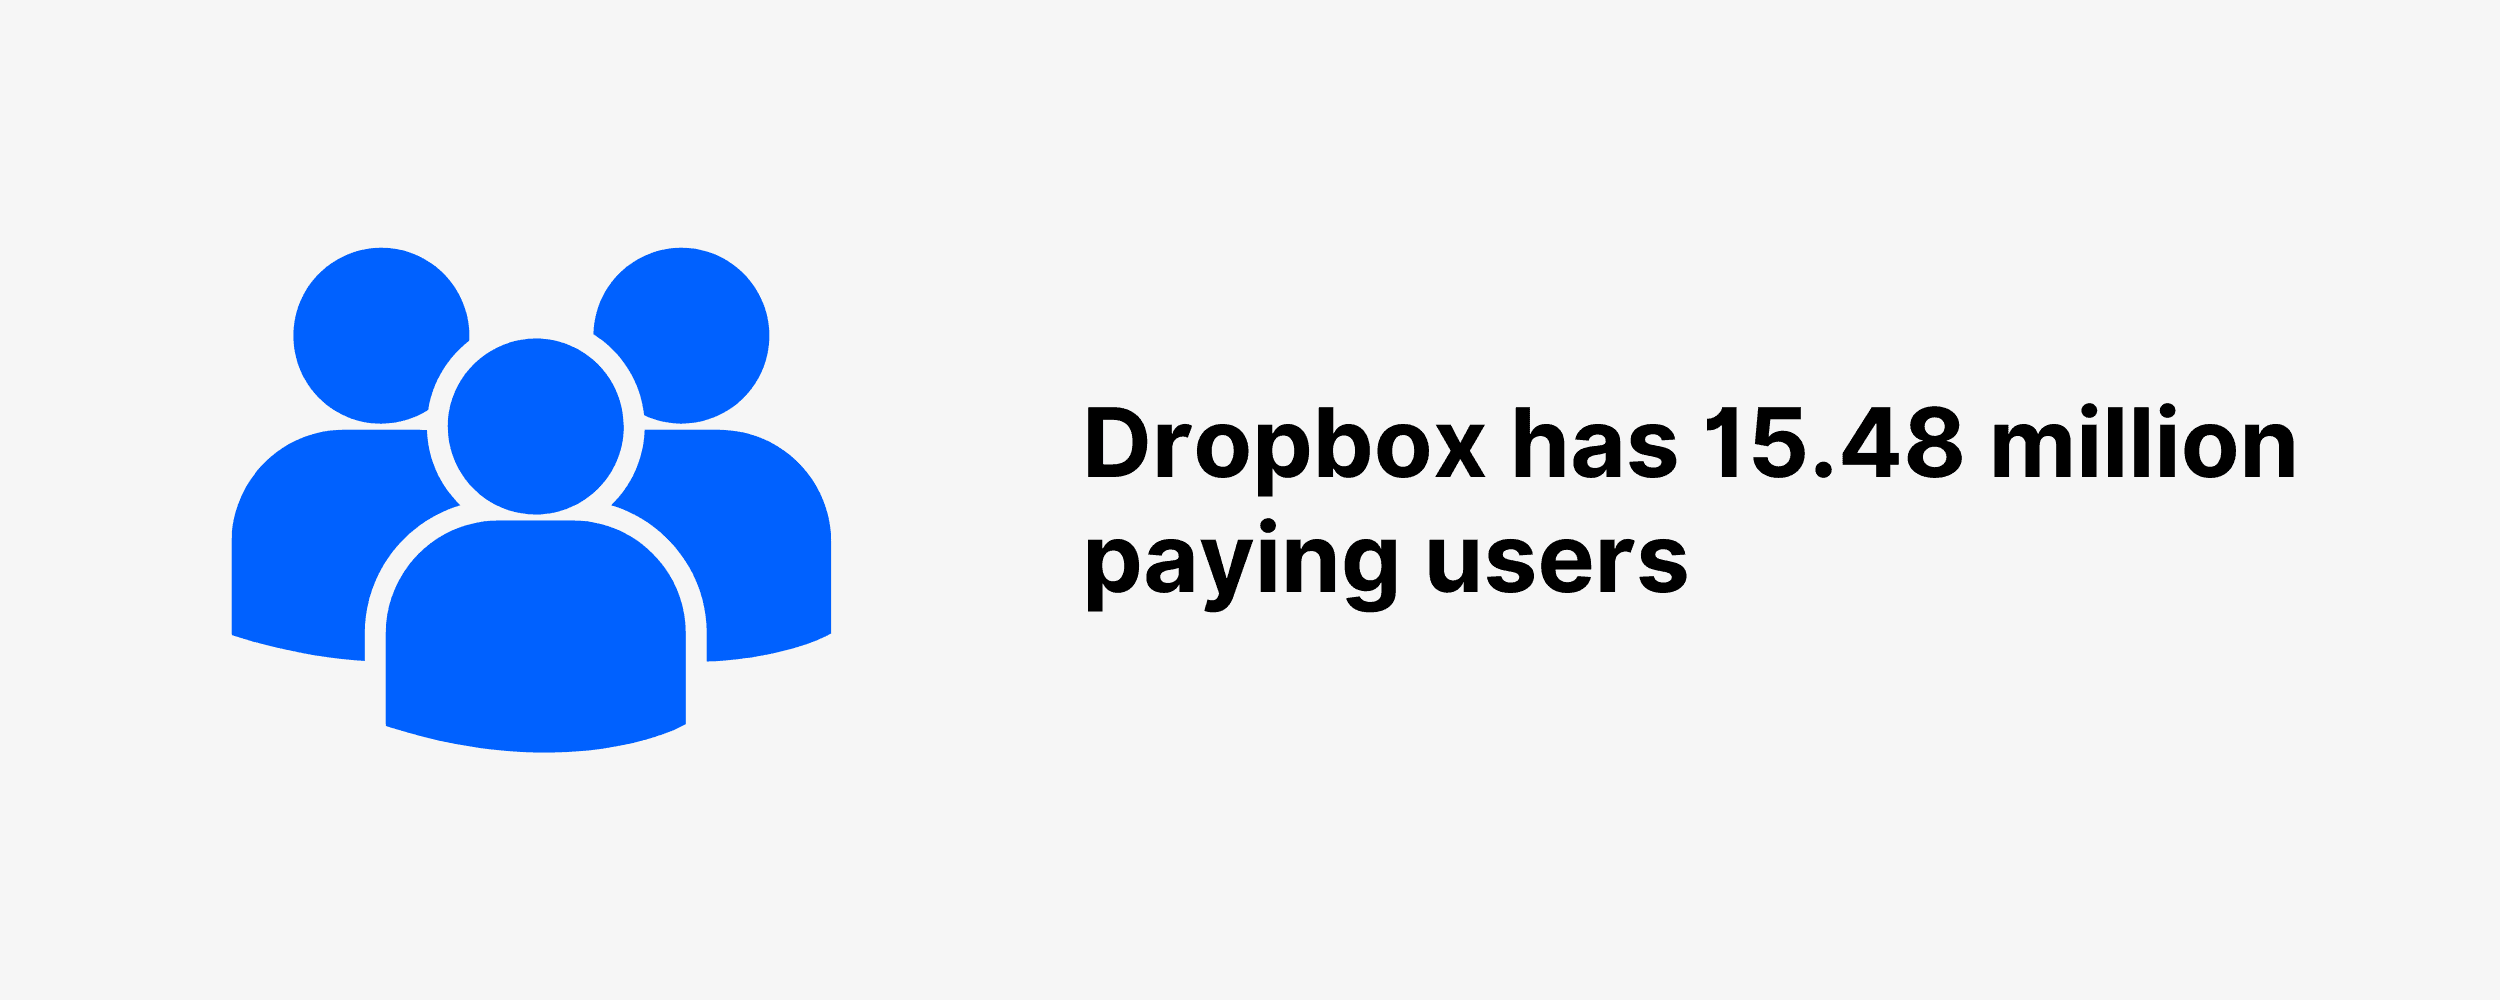 Dropbox has 15.48 million paying users